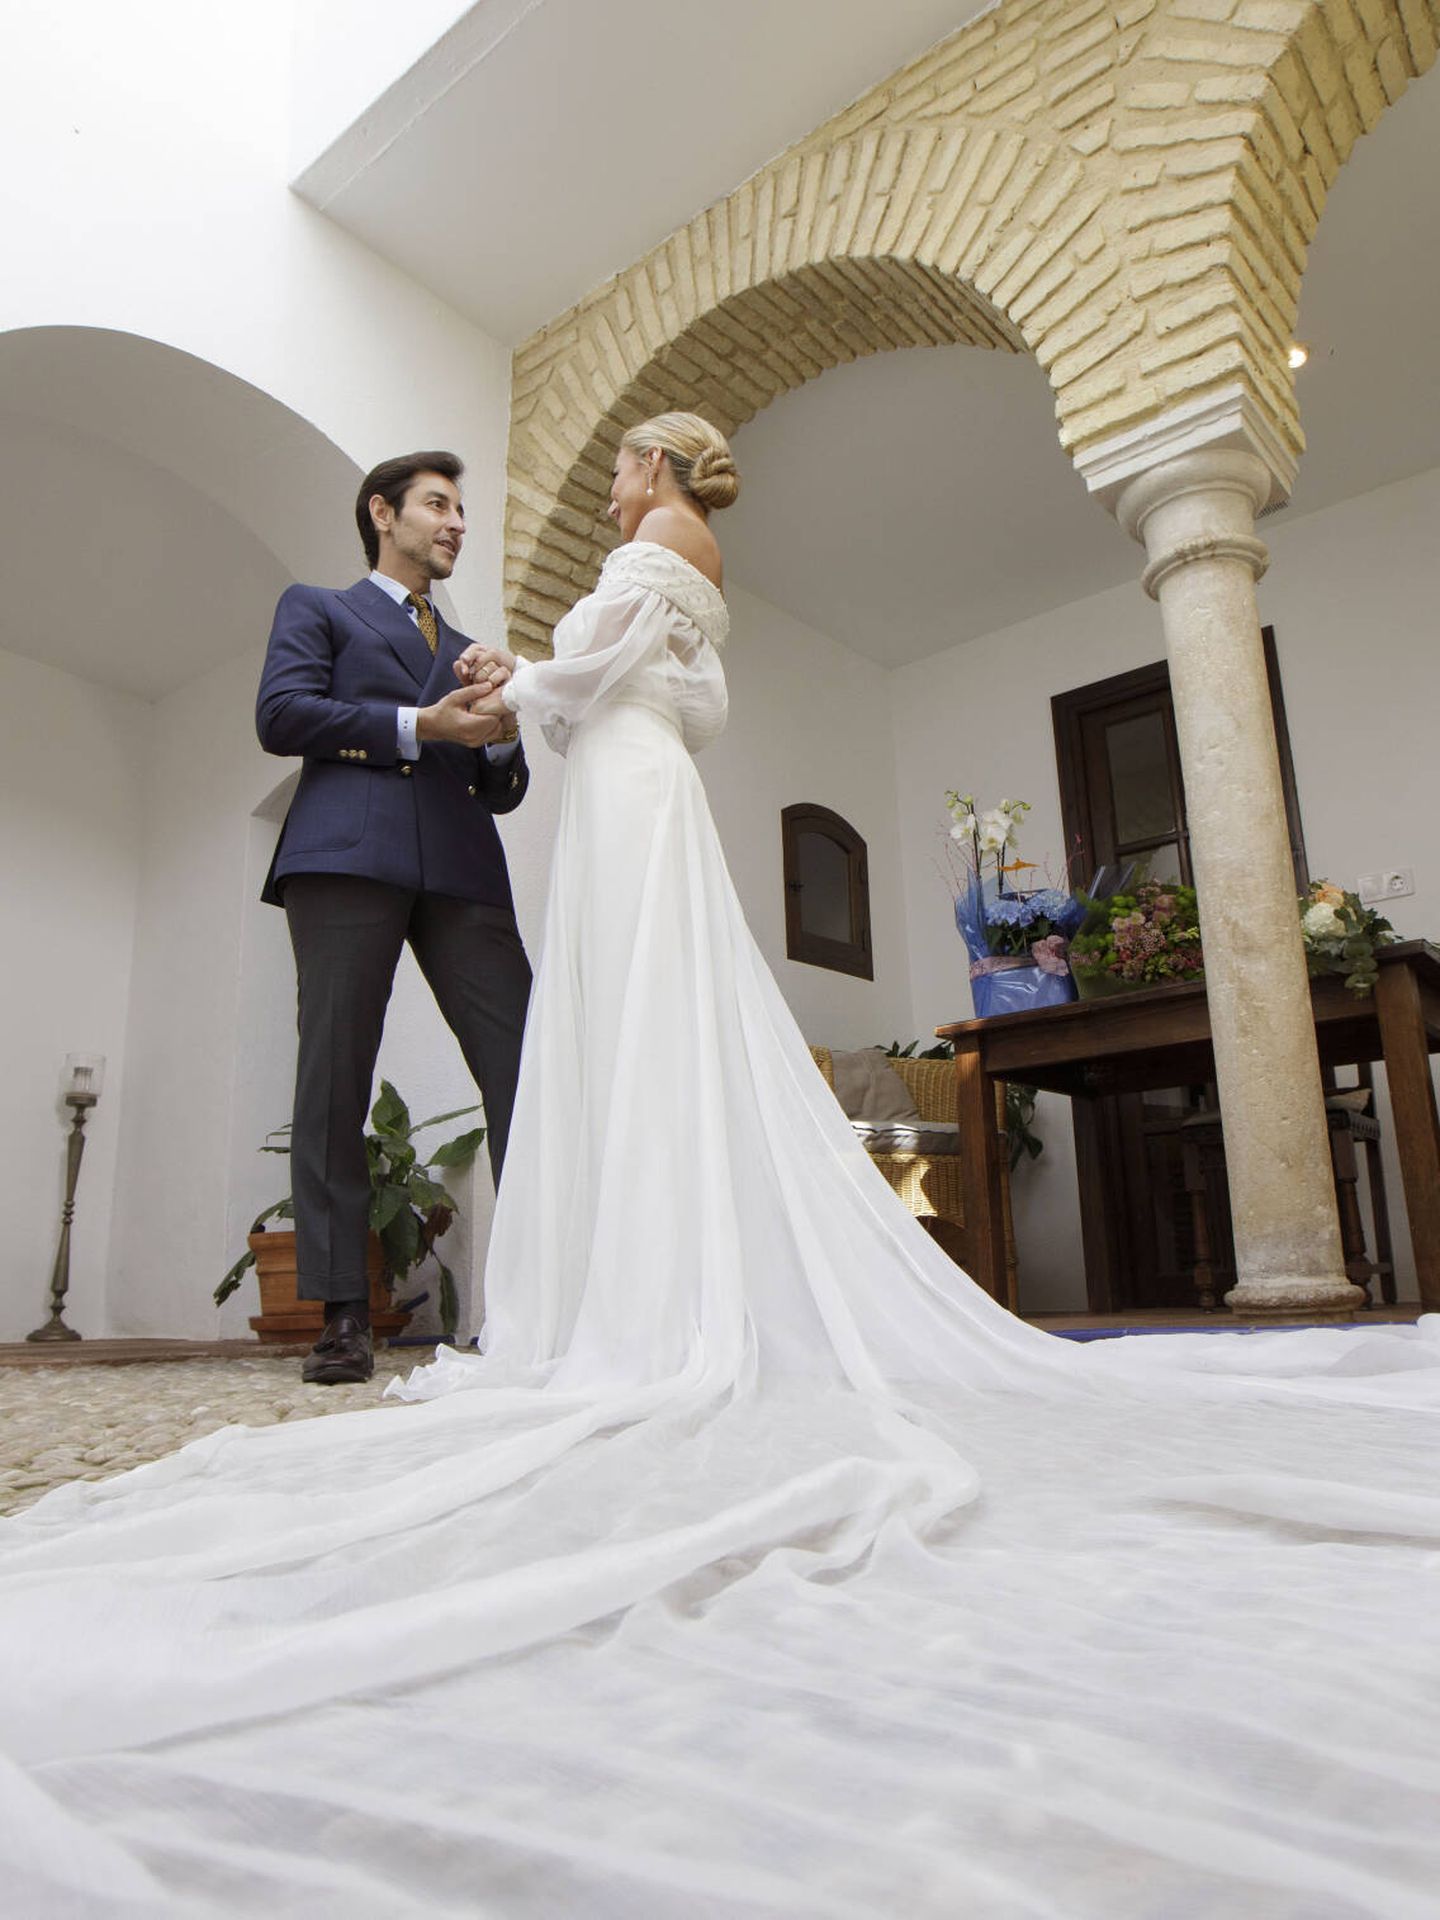 La boda de Cristina y su vestido de novia de Nicolás Montenegro. (Kiko Simeón)